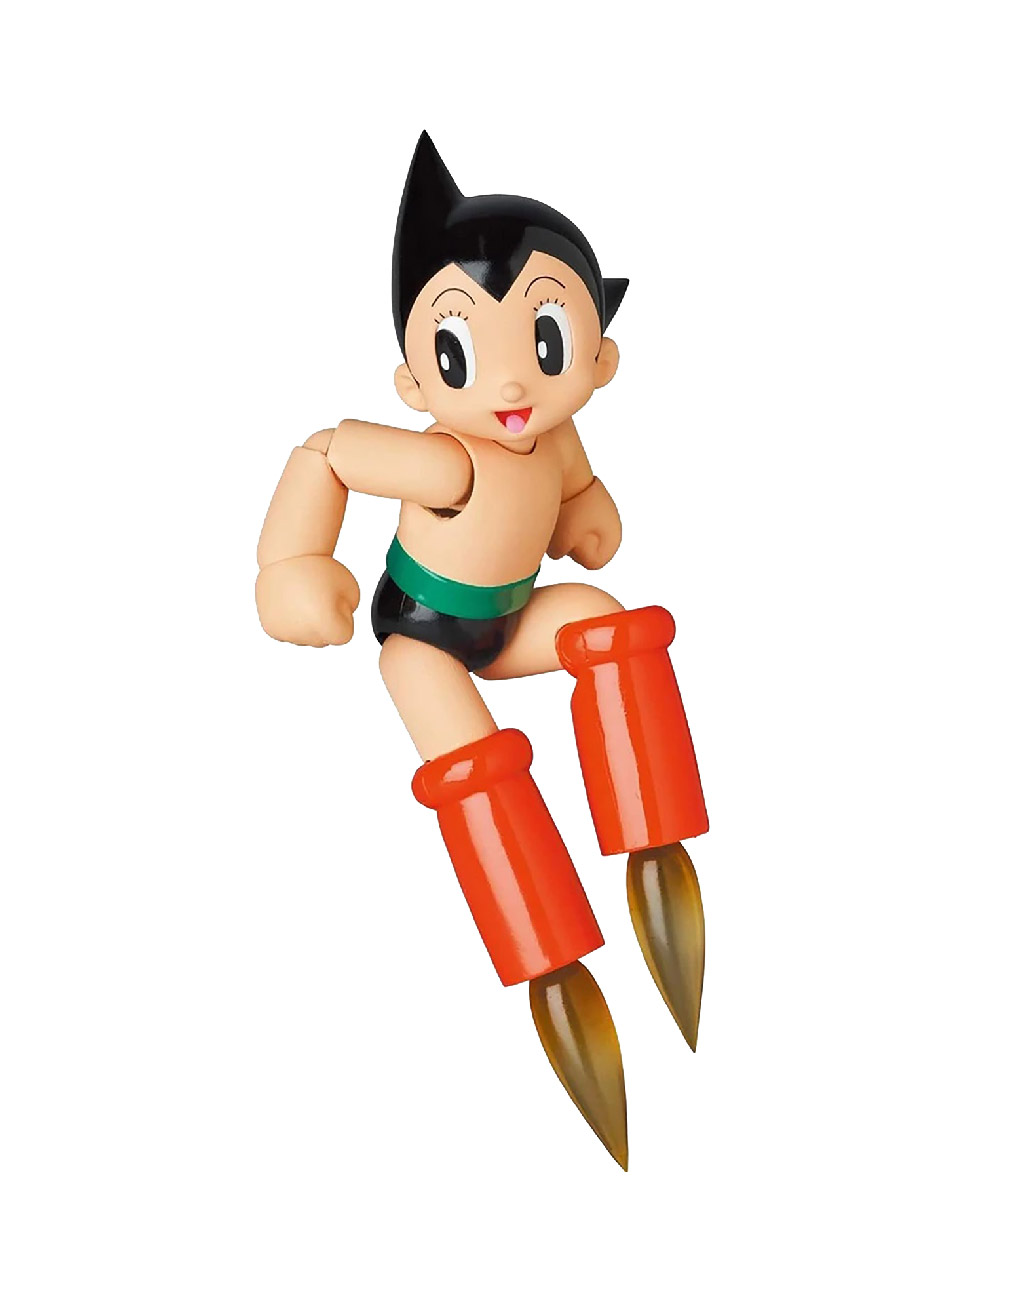 MEDICOM TOY - Astro Boy MAFEX No. 065 Toy Figure